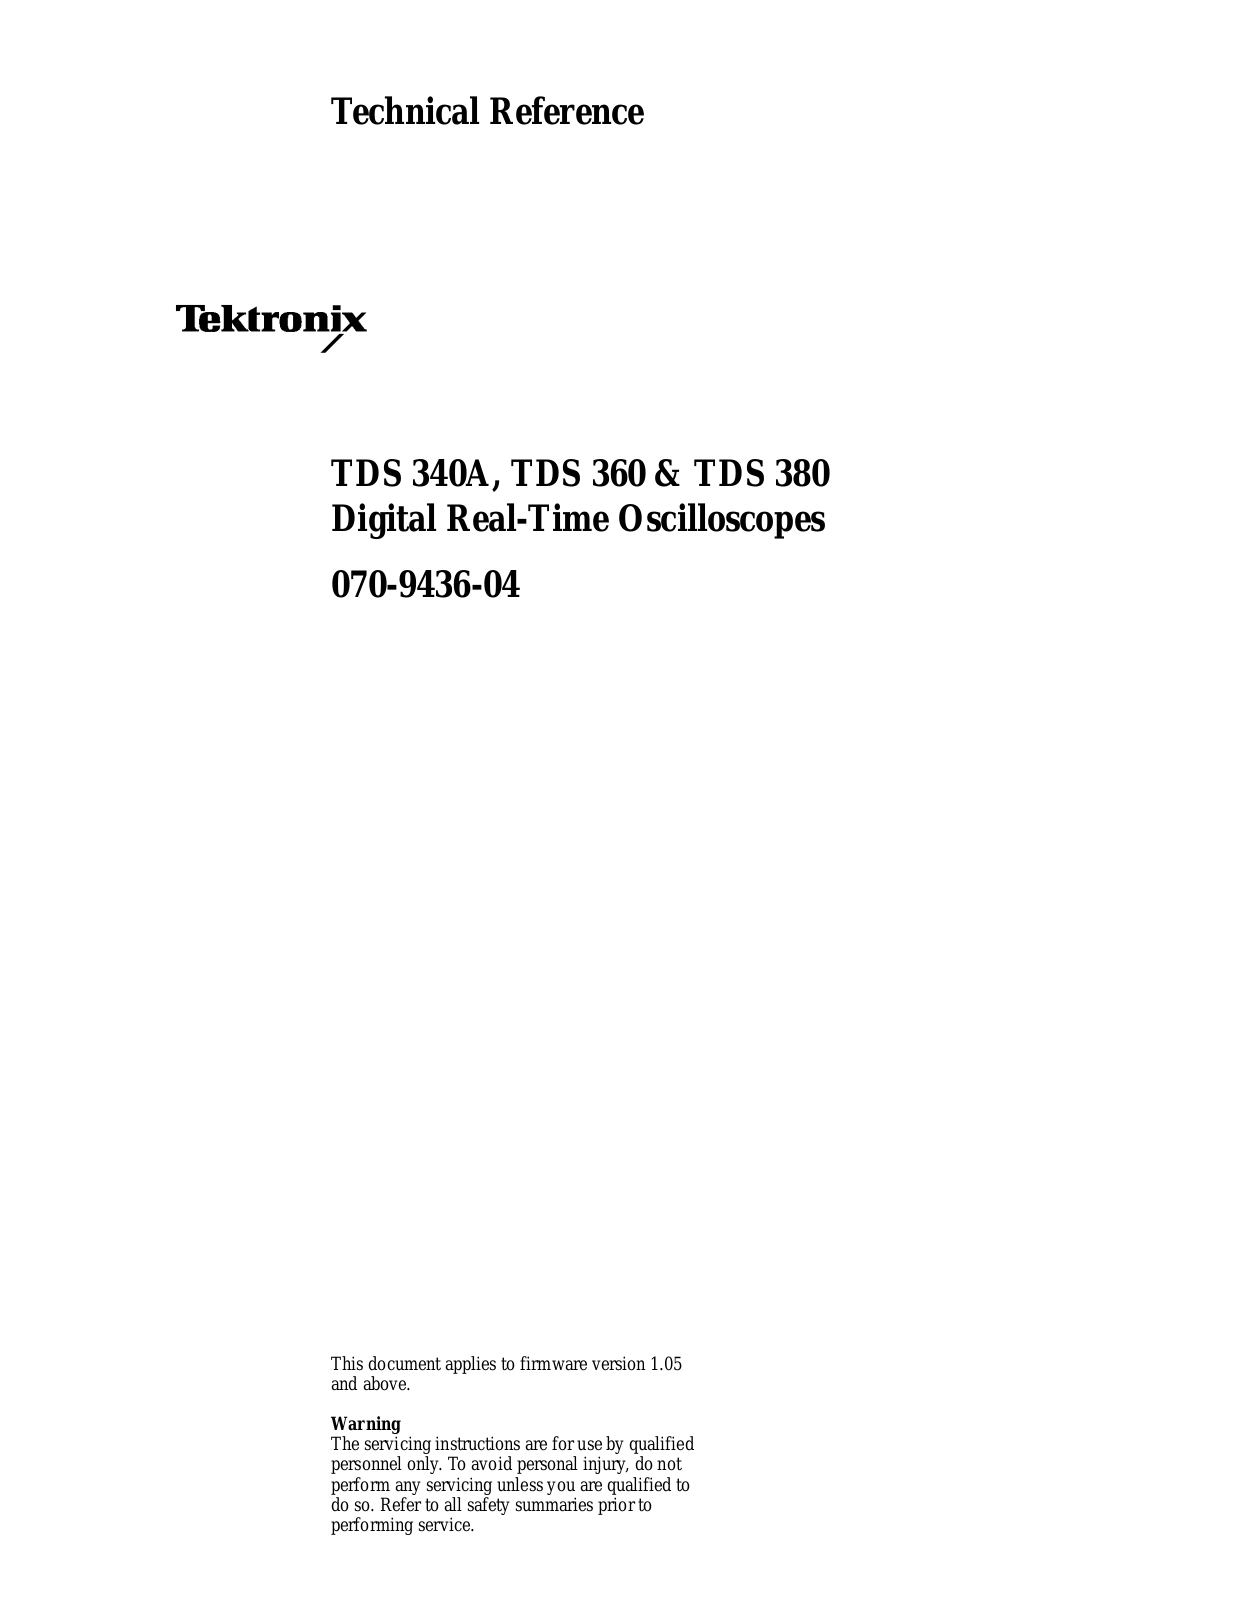 Tektronix TDS 380, TDS 360, TDS 340A Service manual